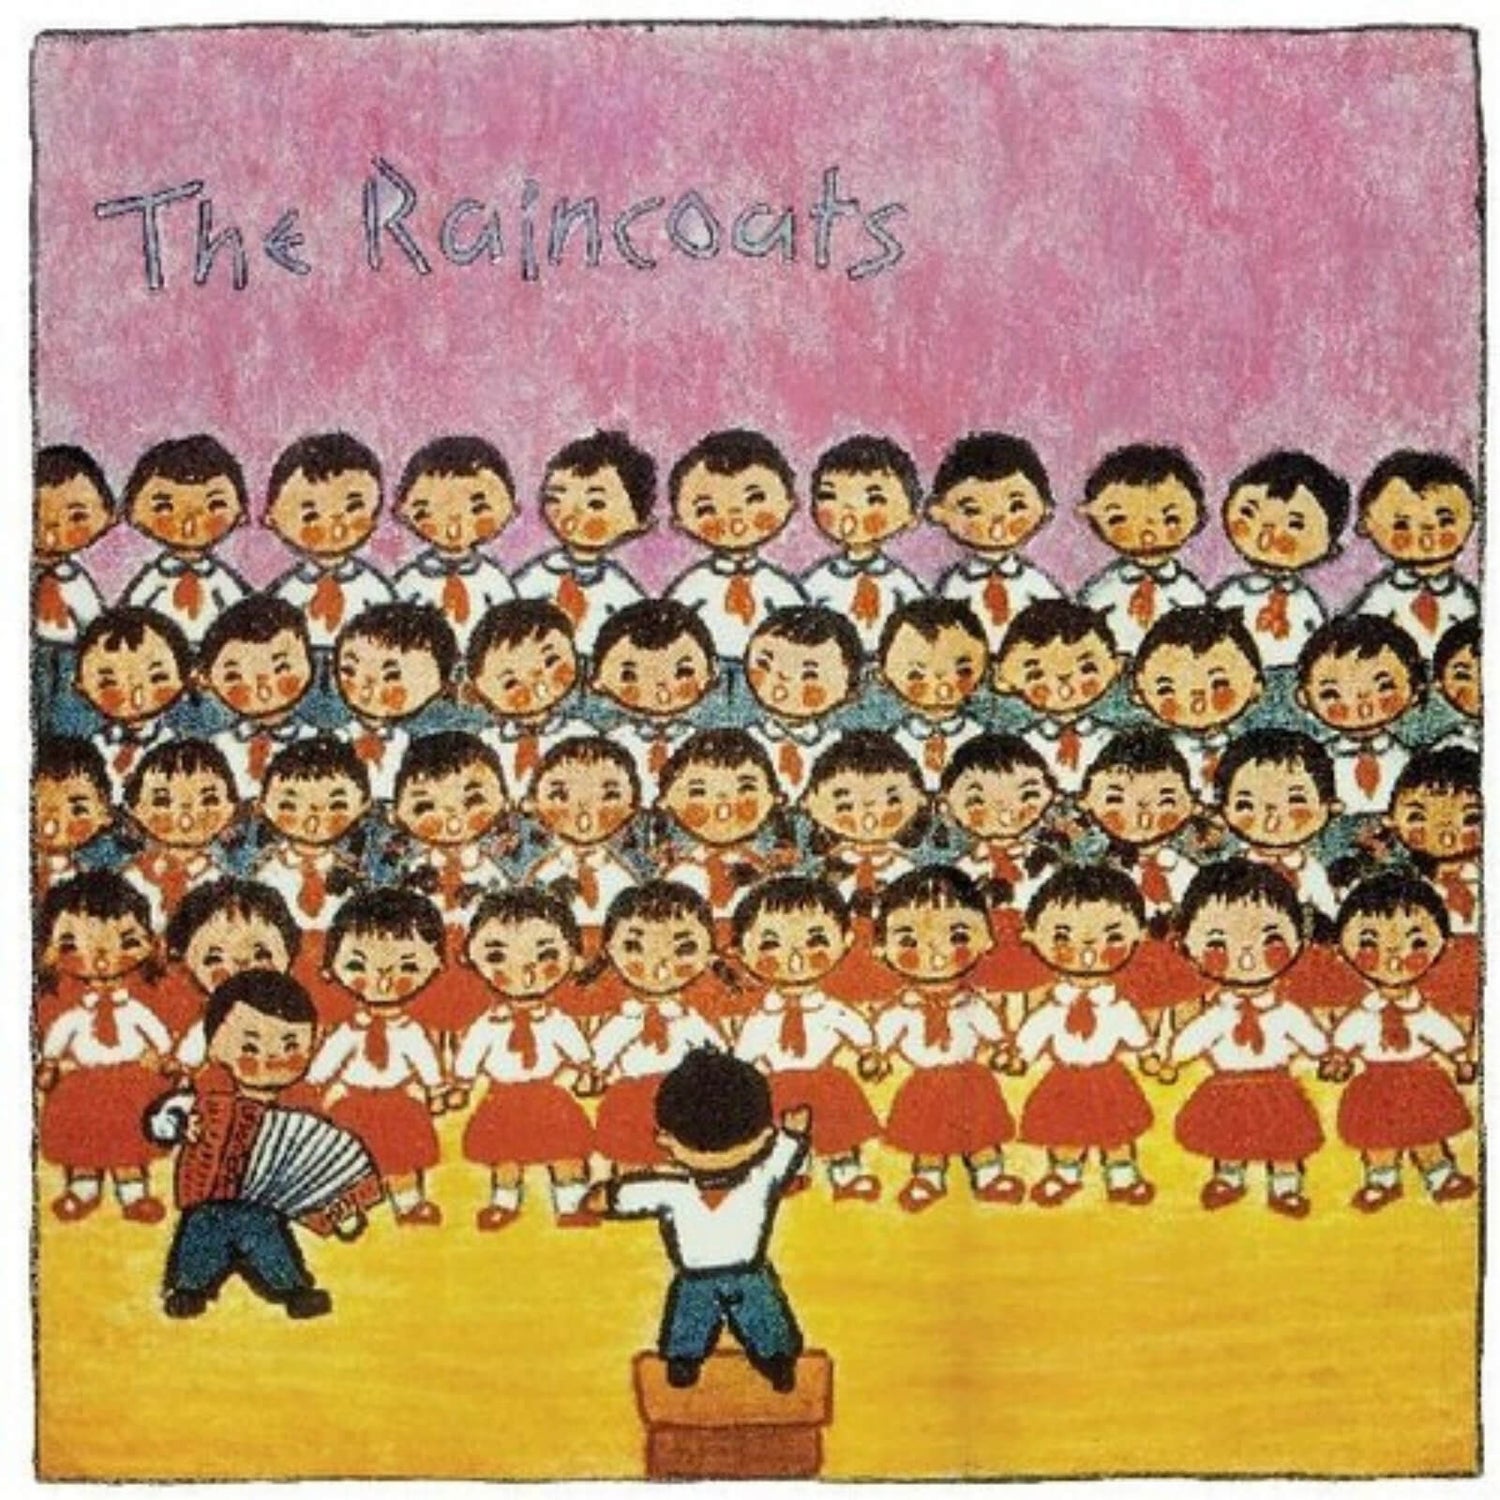 The Raincoats - The Raincoats (Anniversary Edition) Vinyl